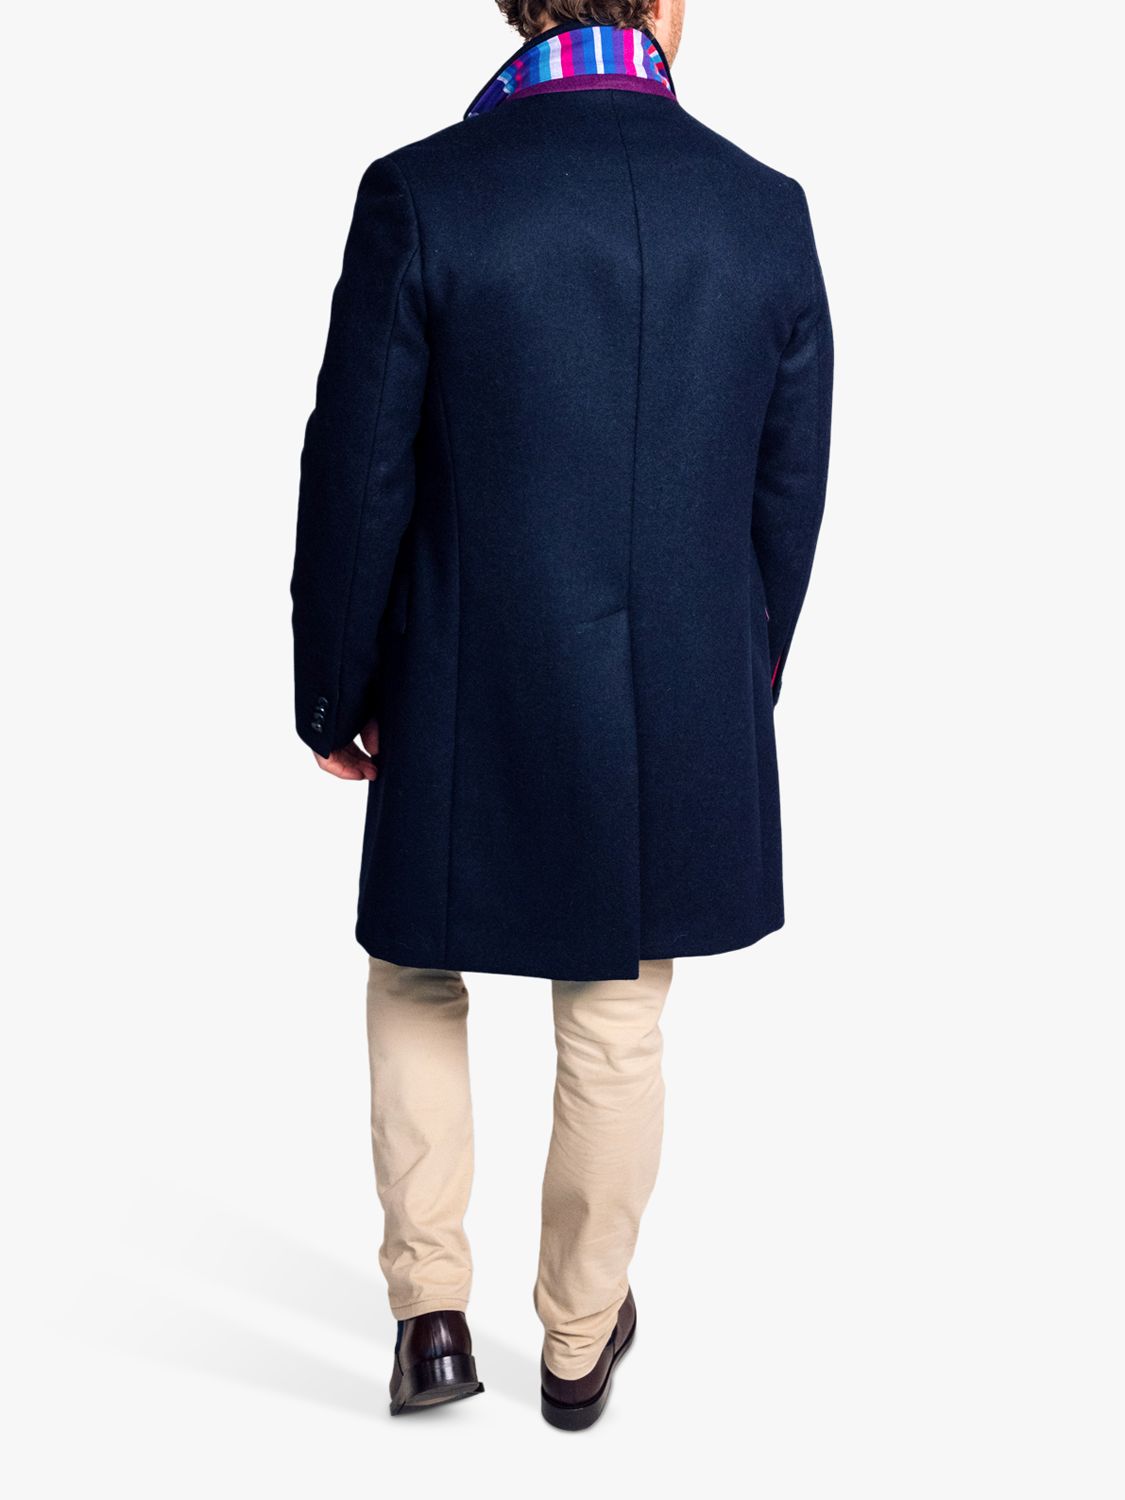 Buy KOY Heritage British Wool Tailored Fit Overcoat, Navy Online at johnlewis.com